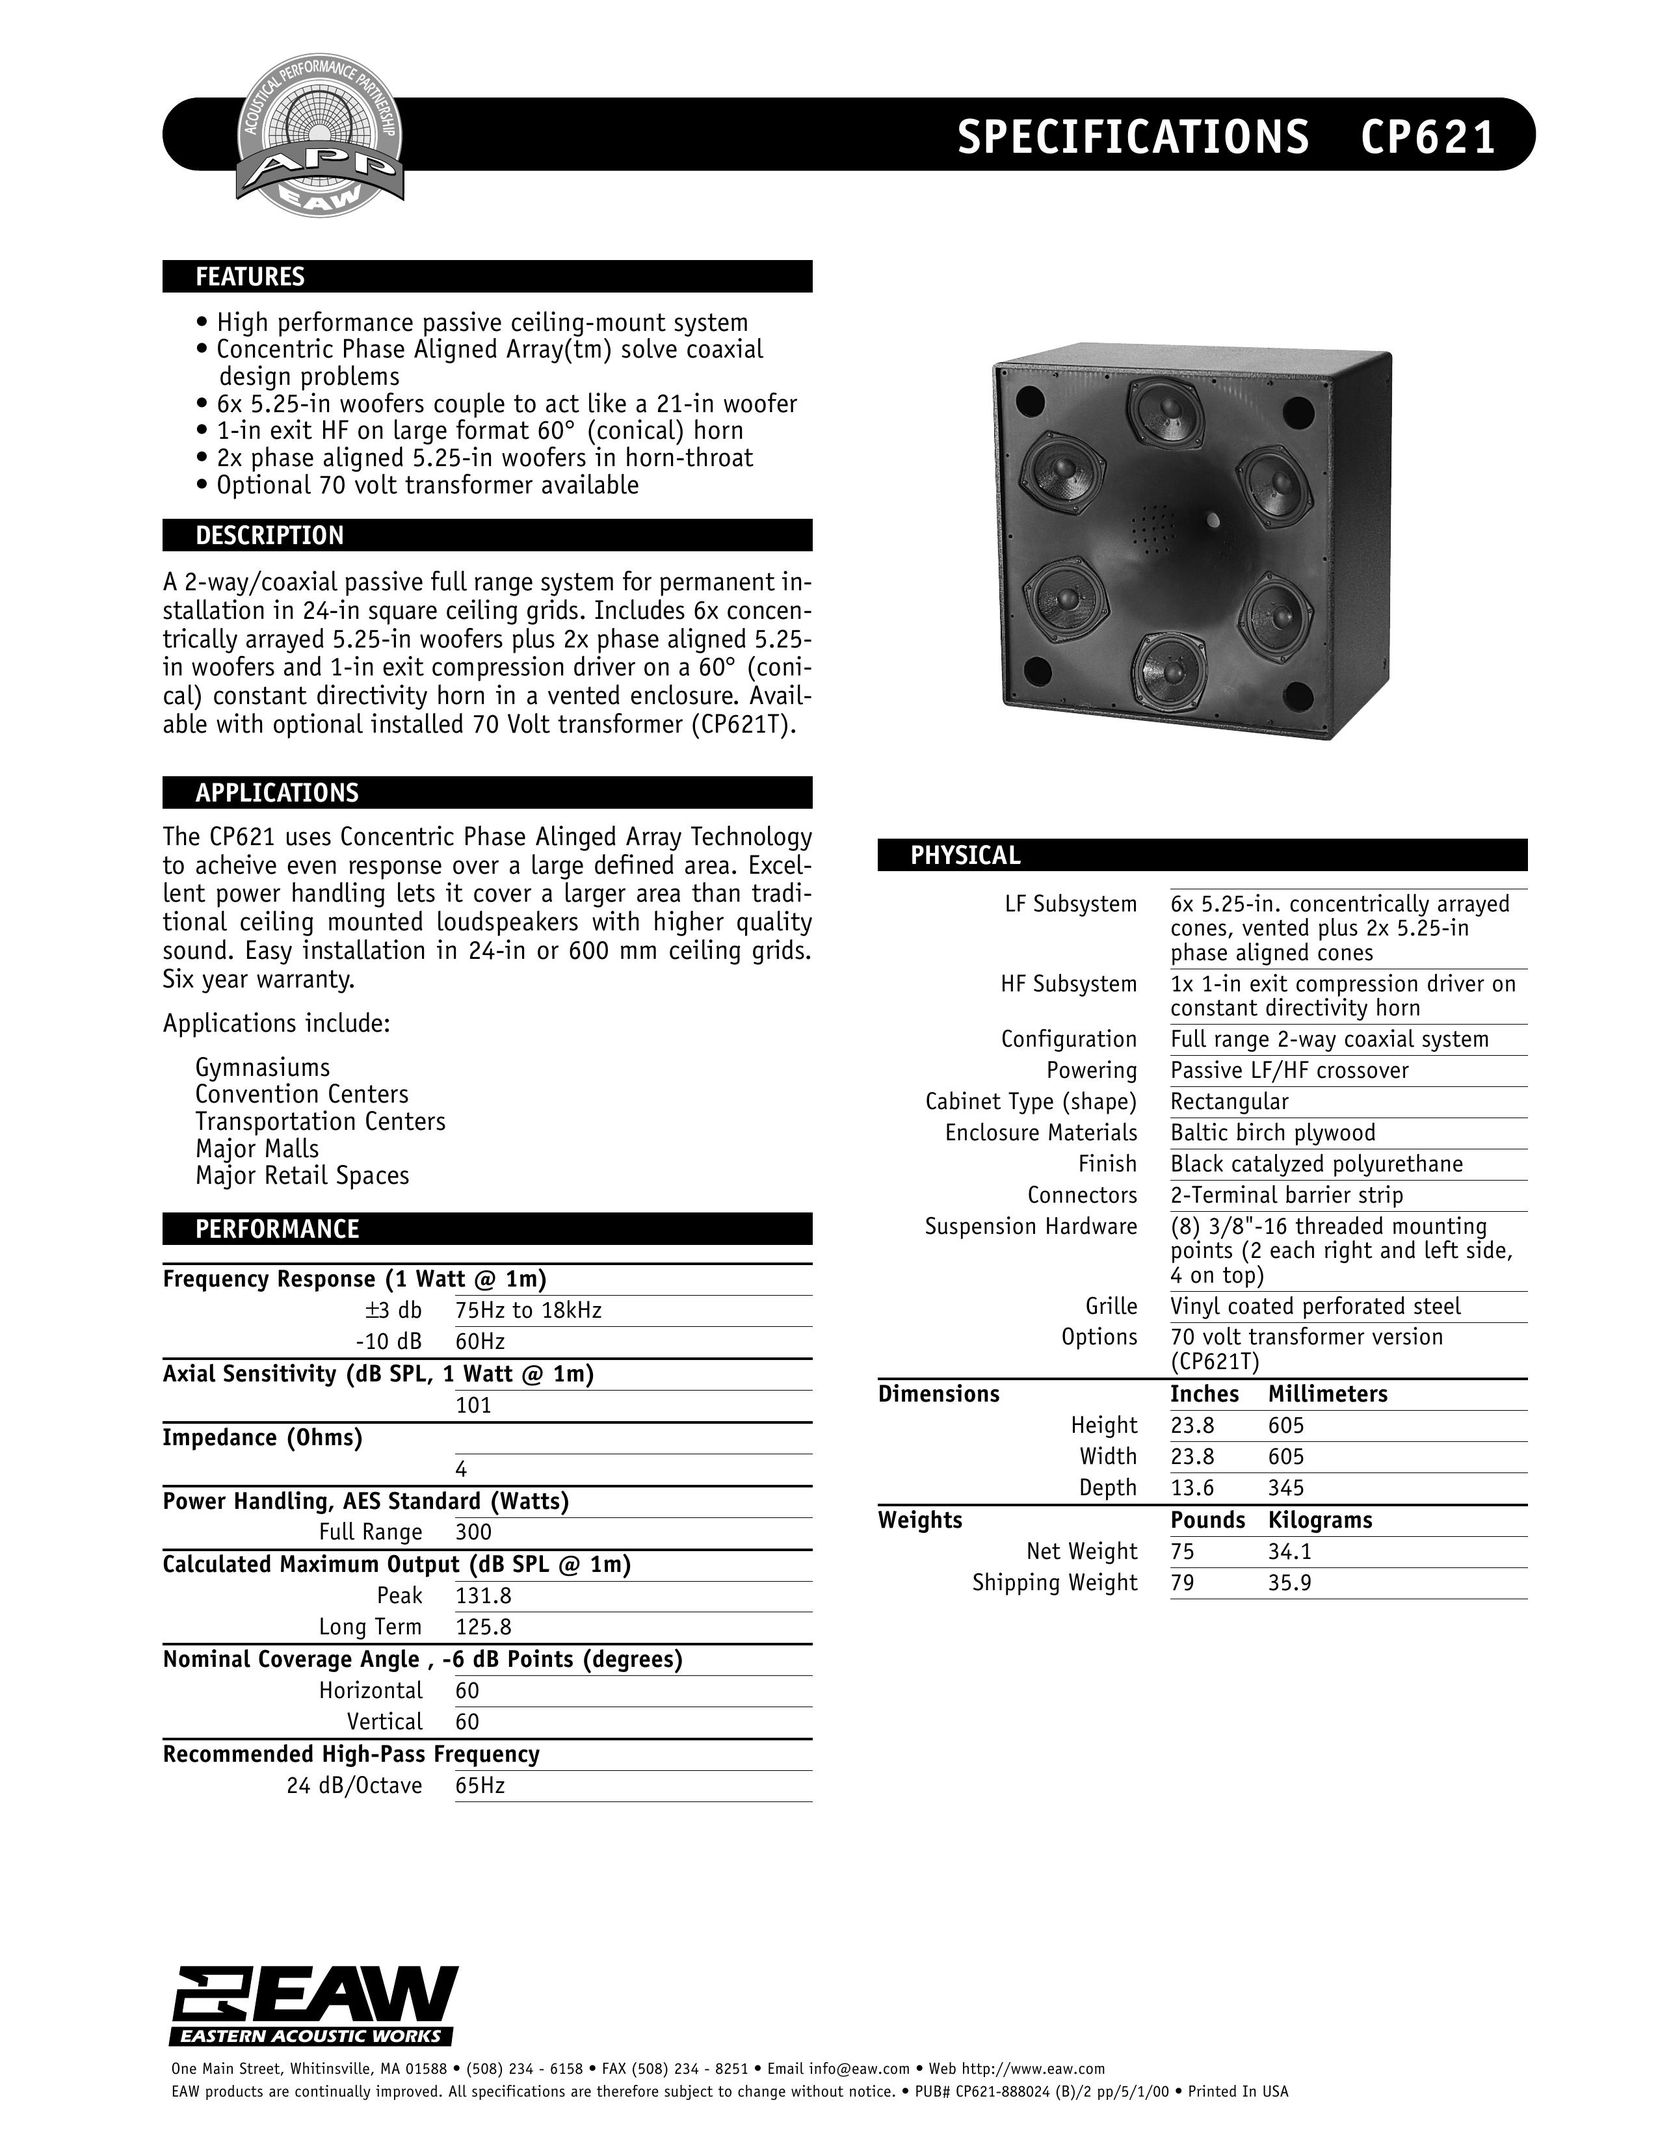 EAW CP621 Speaker User Manual